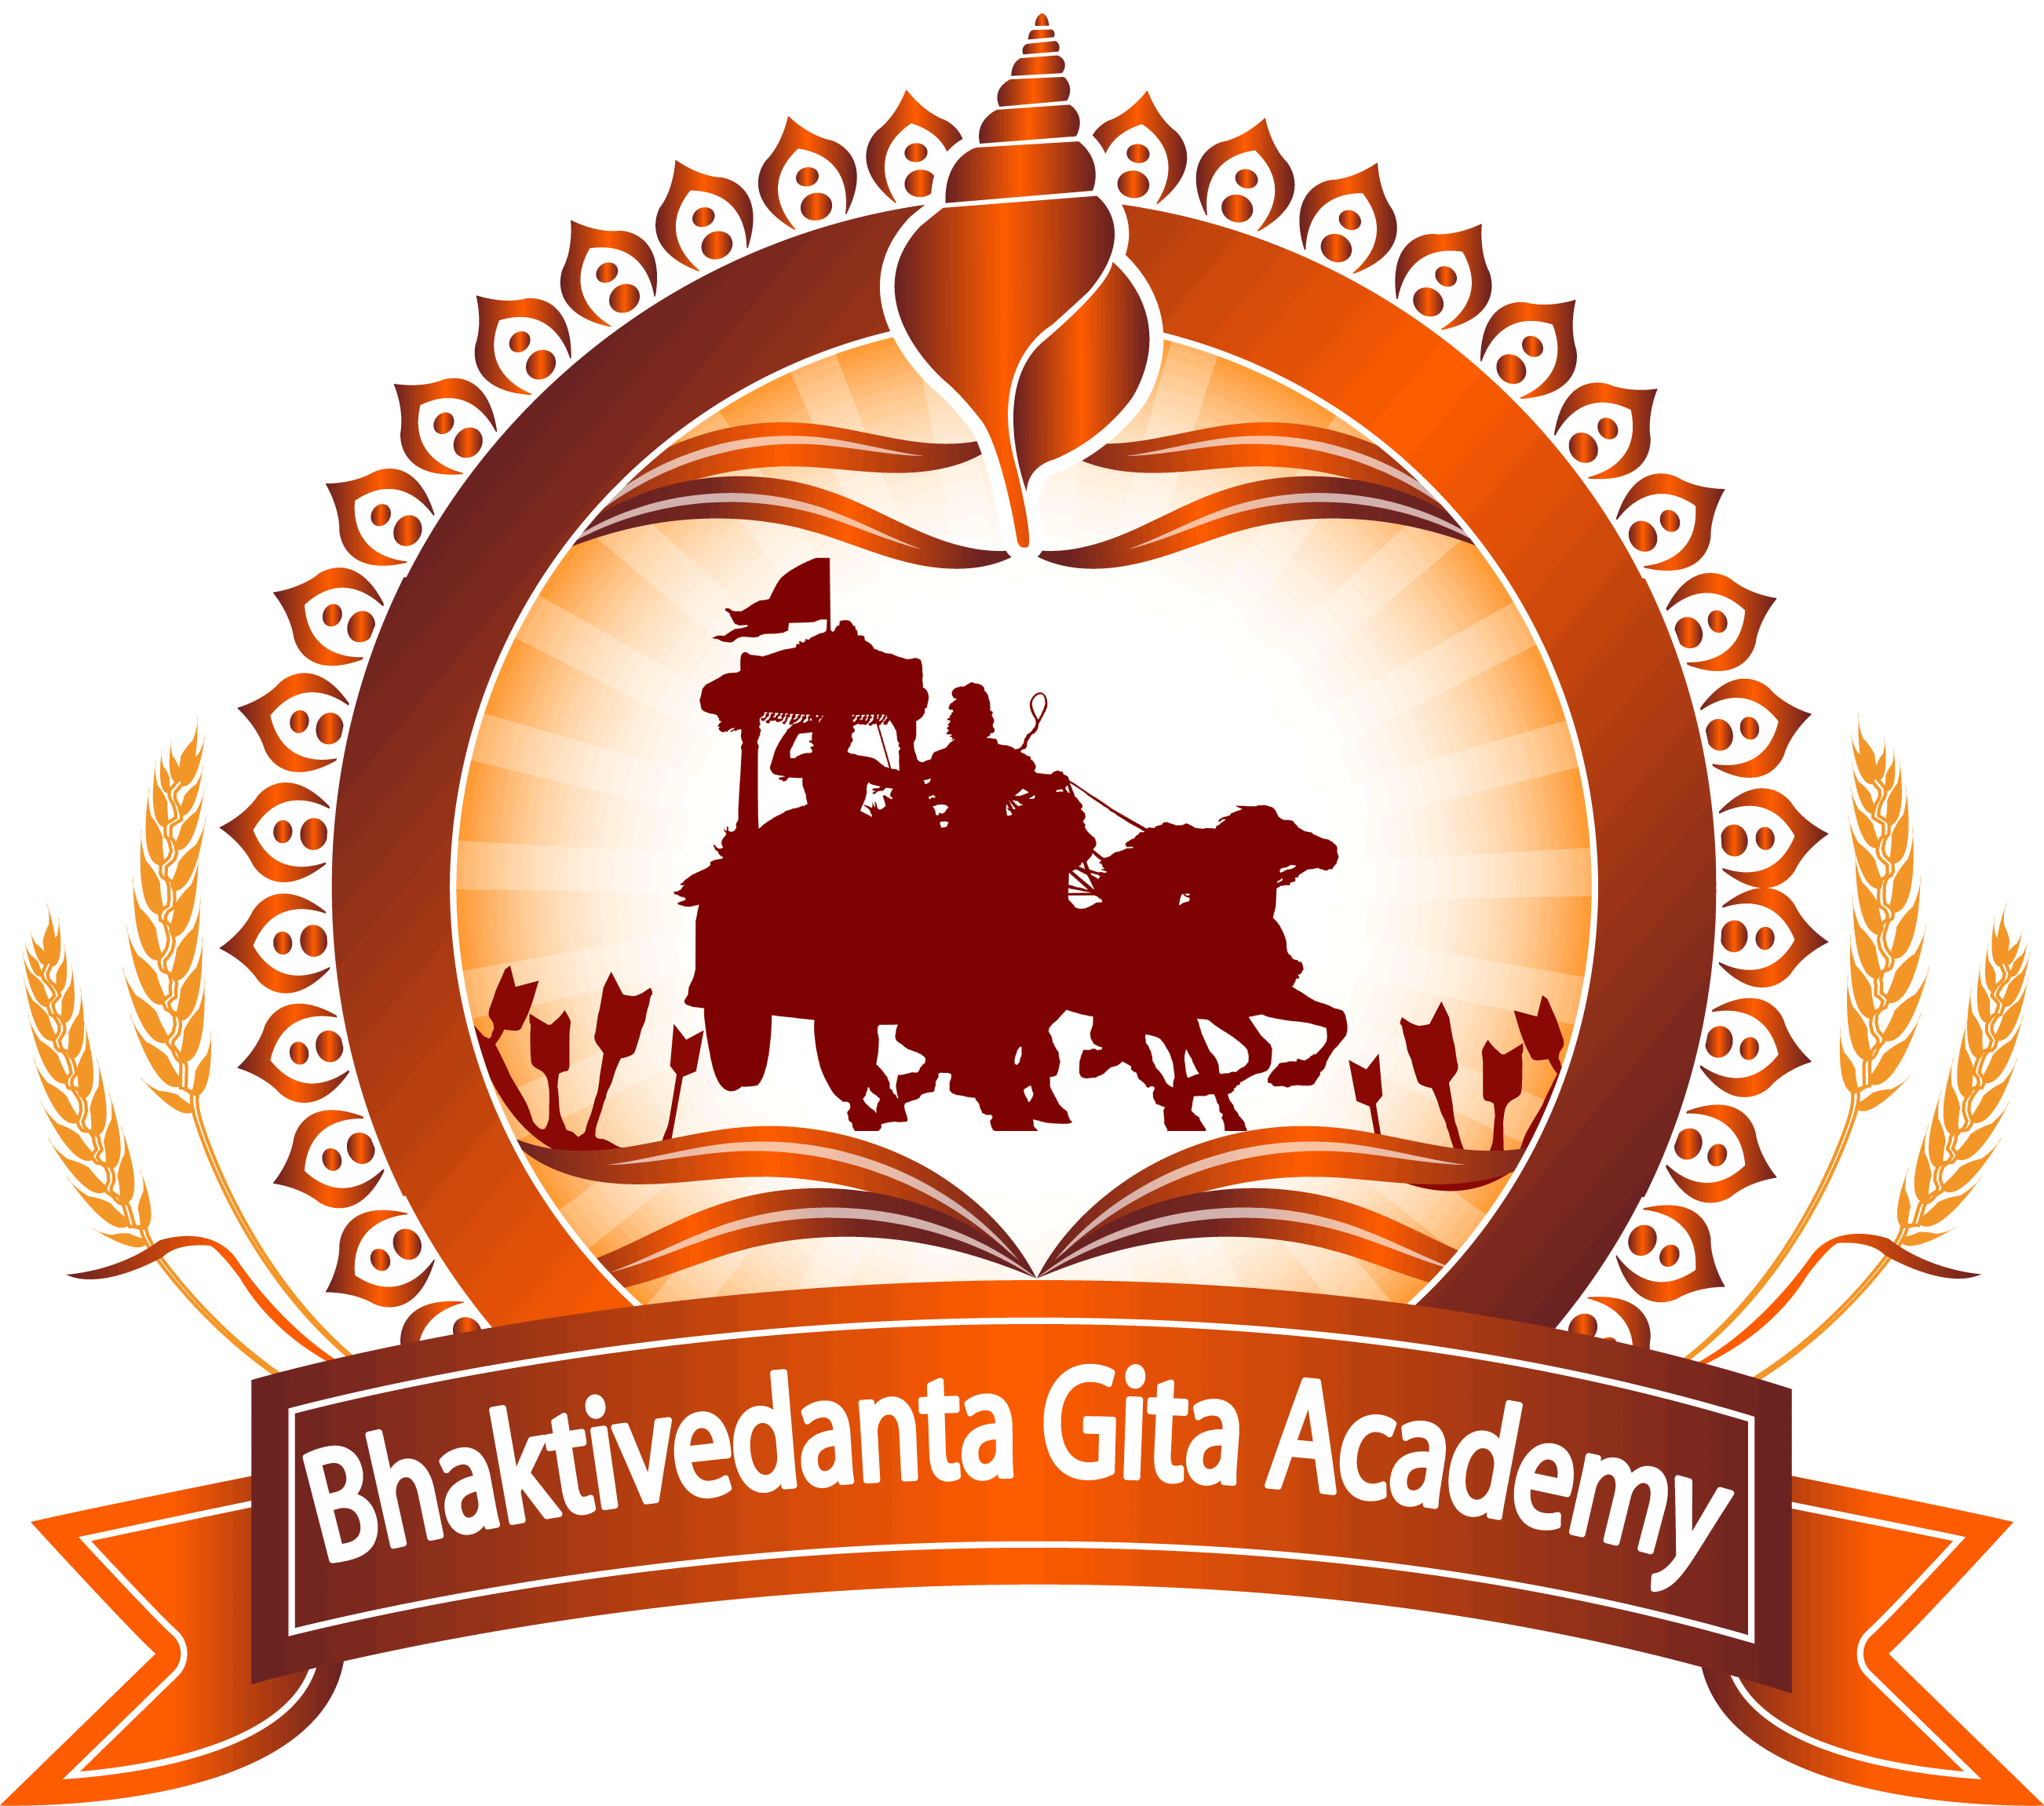 Online Gita Course